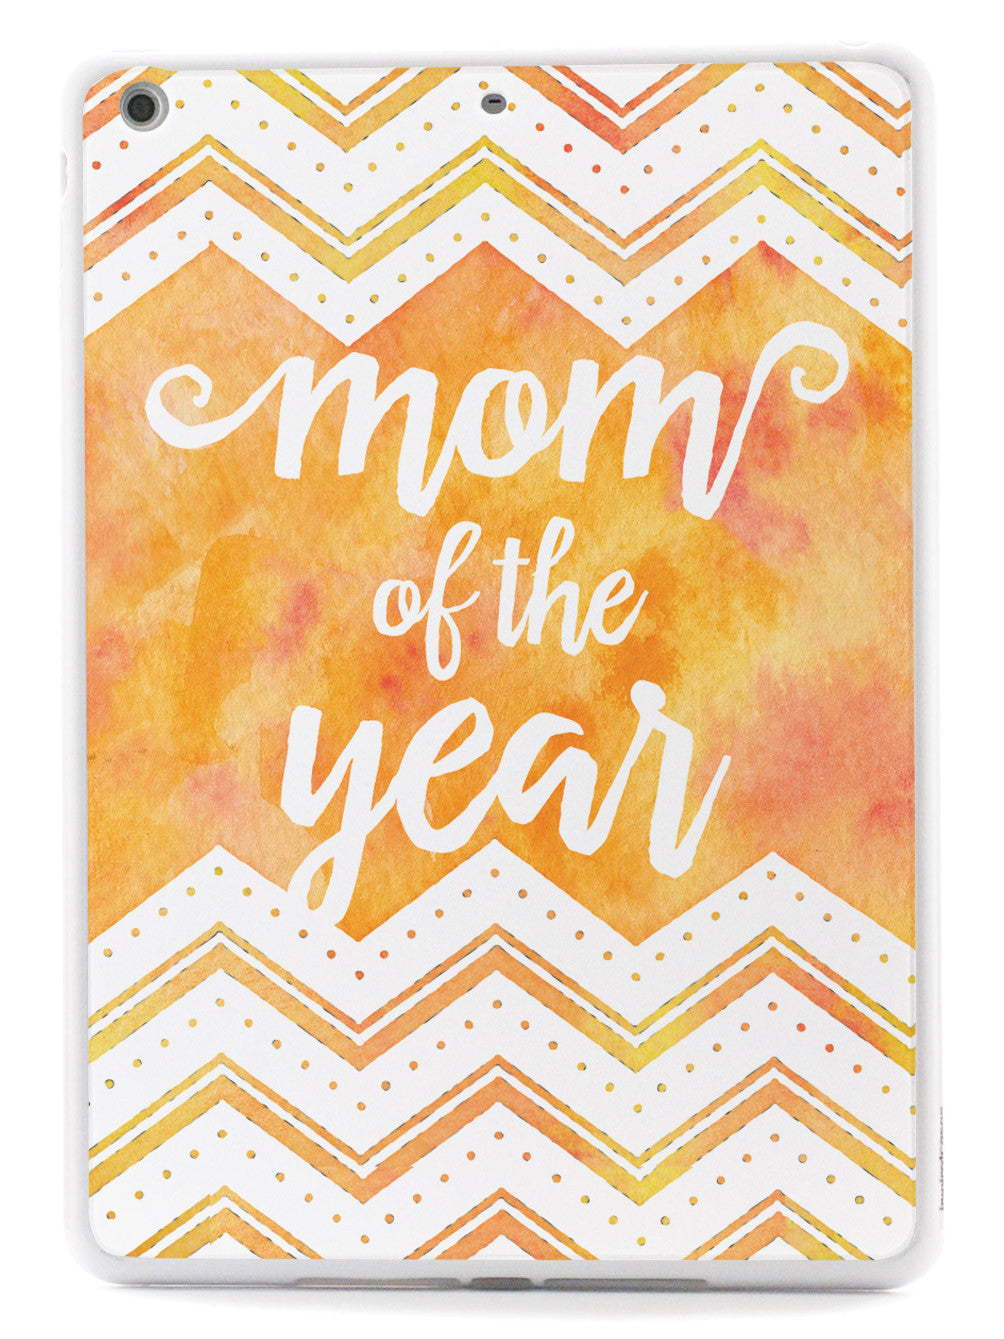 Mom of the Year - Yellow Orange Case